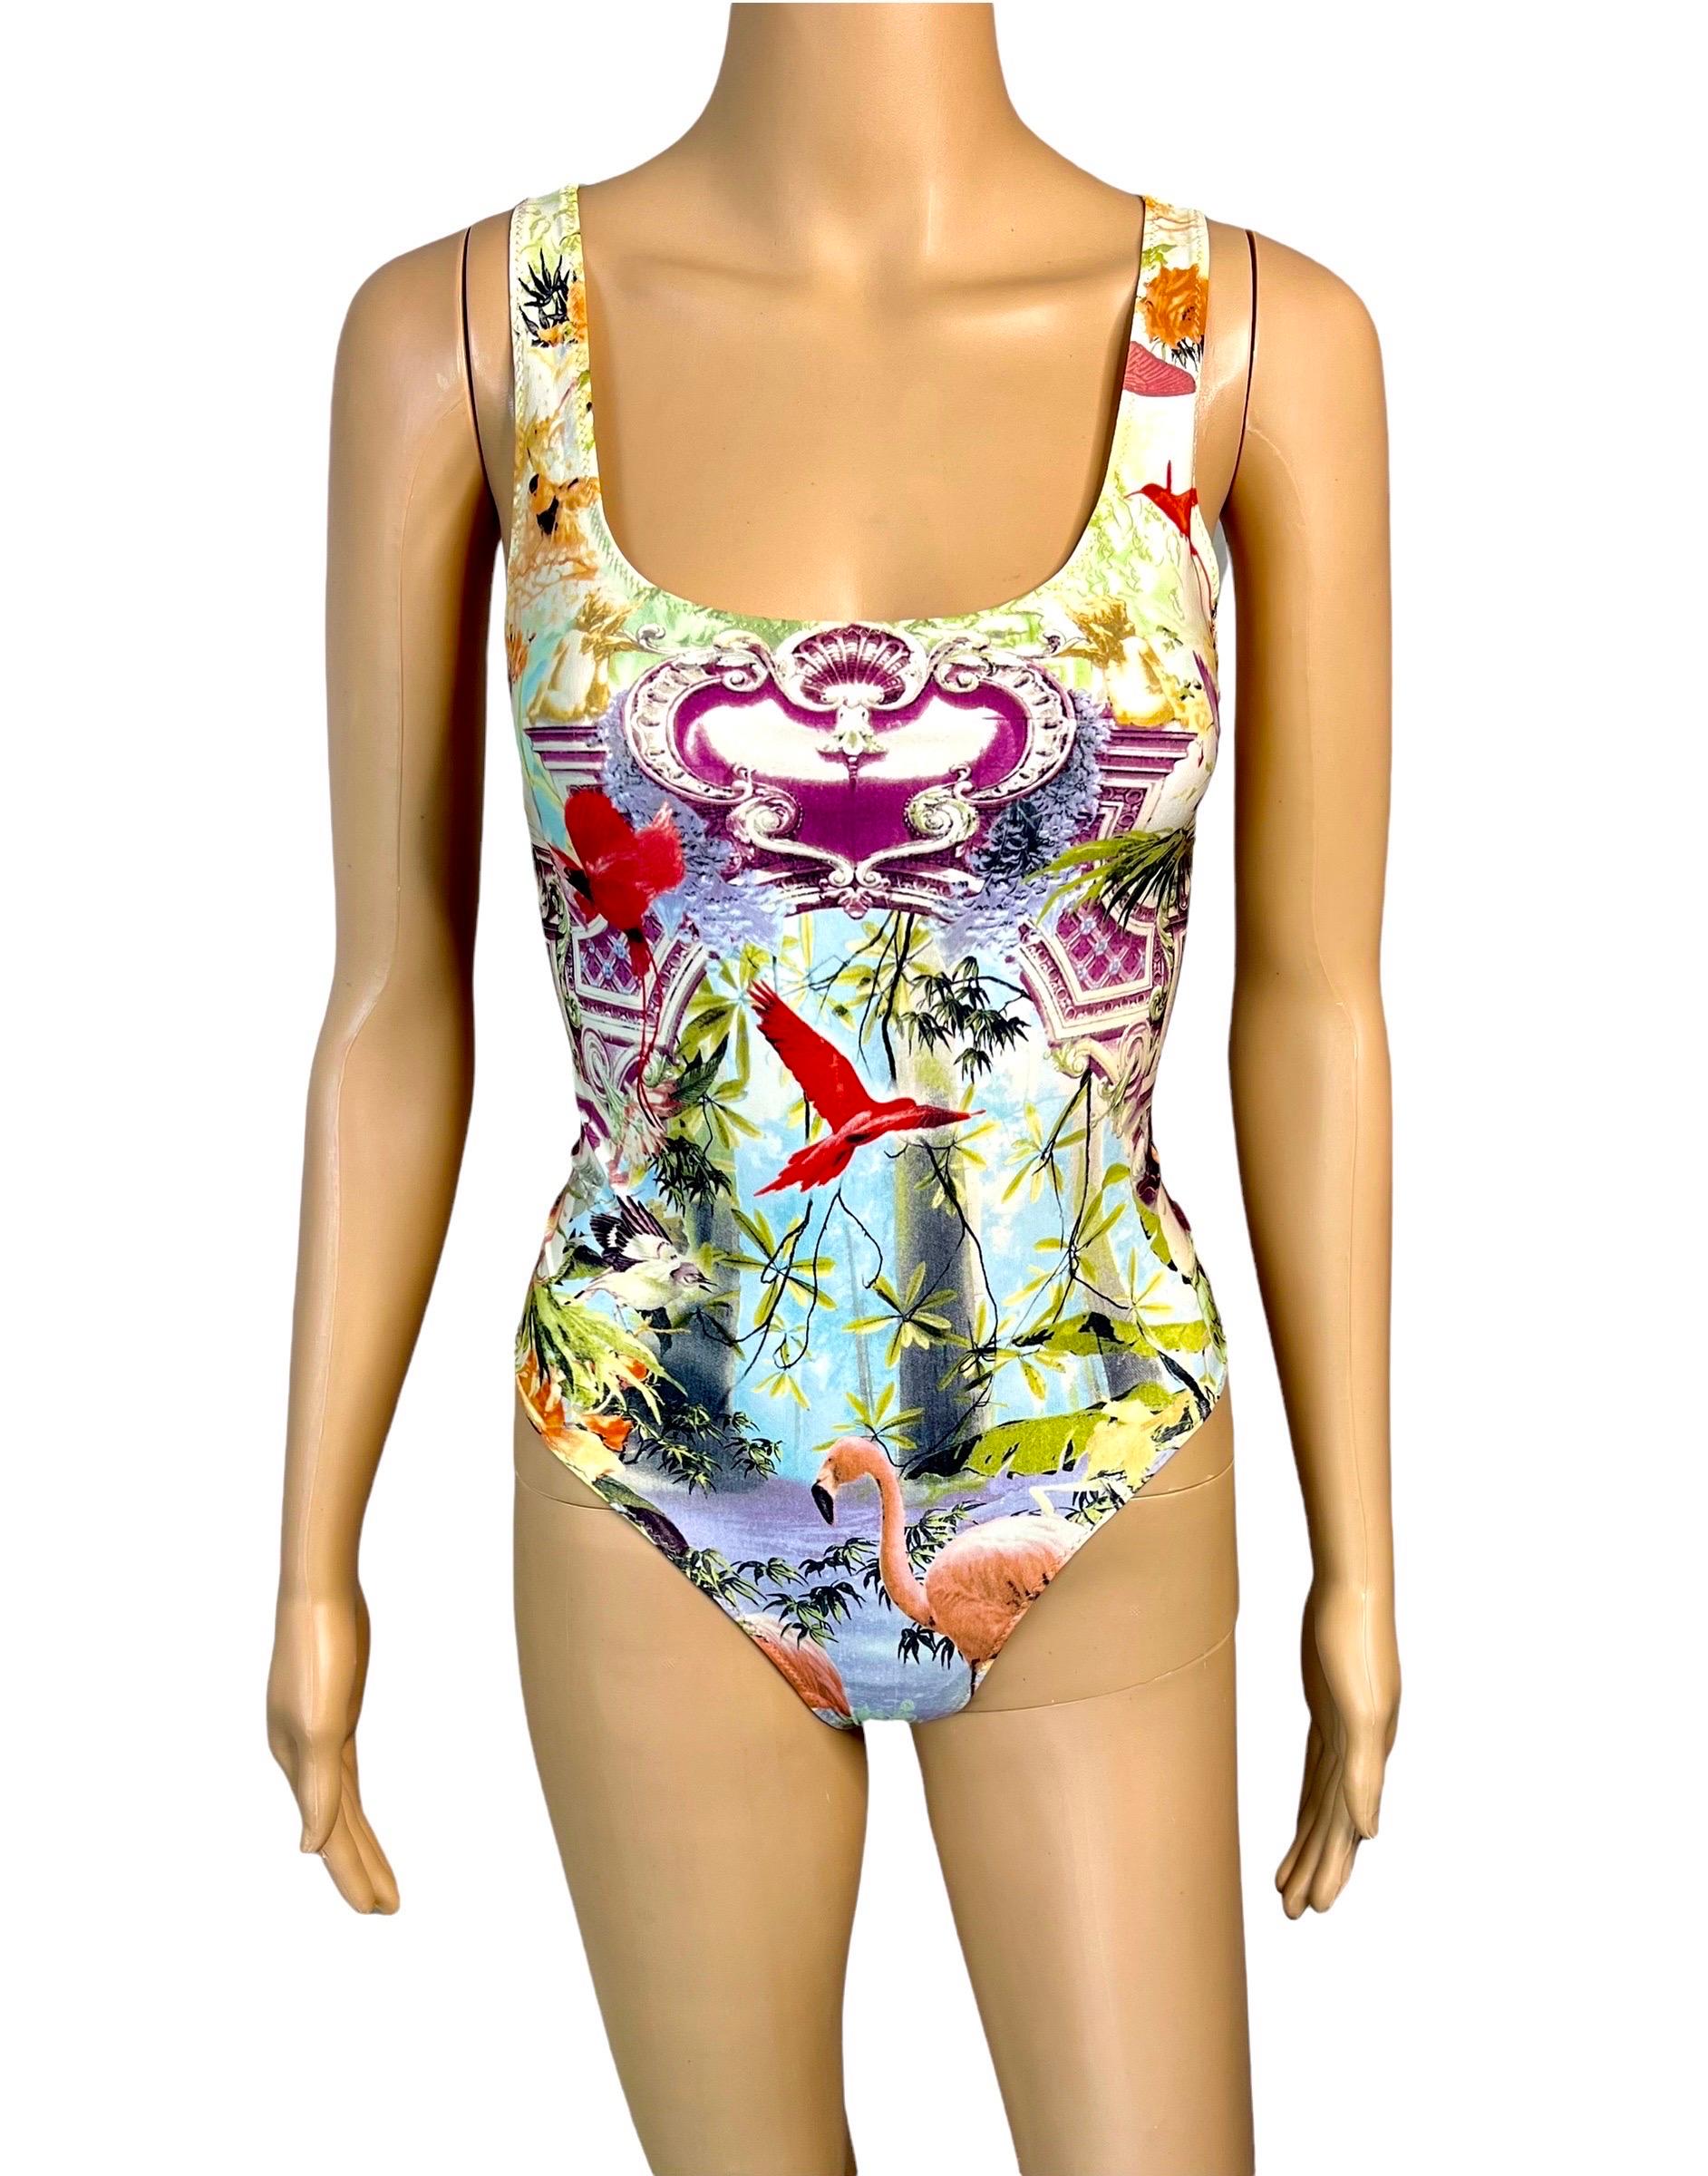 Jean Paul Gaultier Soleil S/S 1999 Flamingo Tropical Print Bodysuit One-Piece Swimwear Swimsuit 

Excellent état. Please note size tag has been removed.

